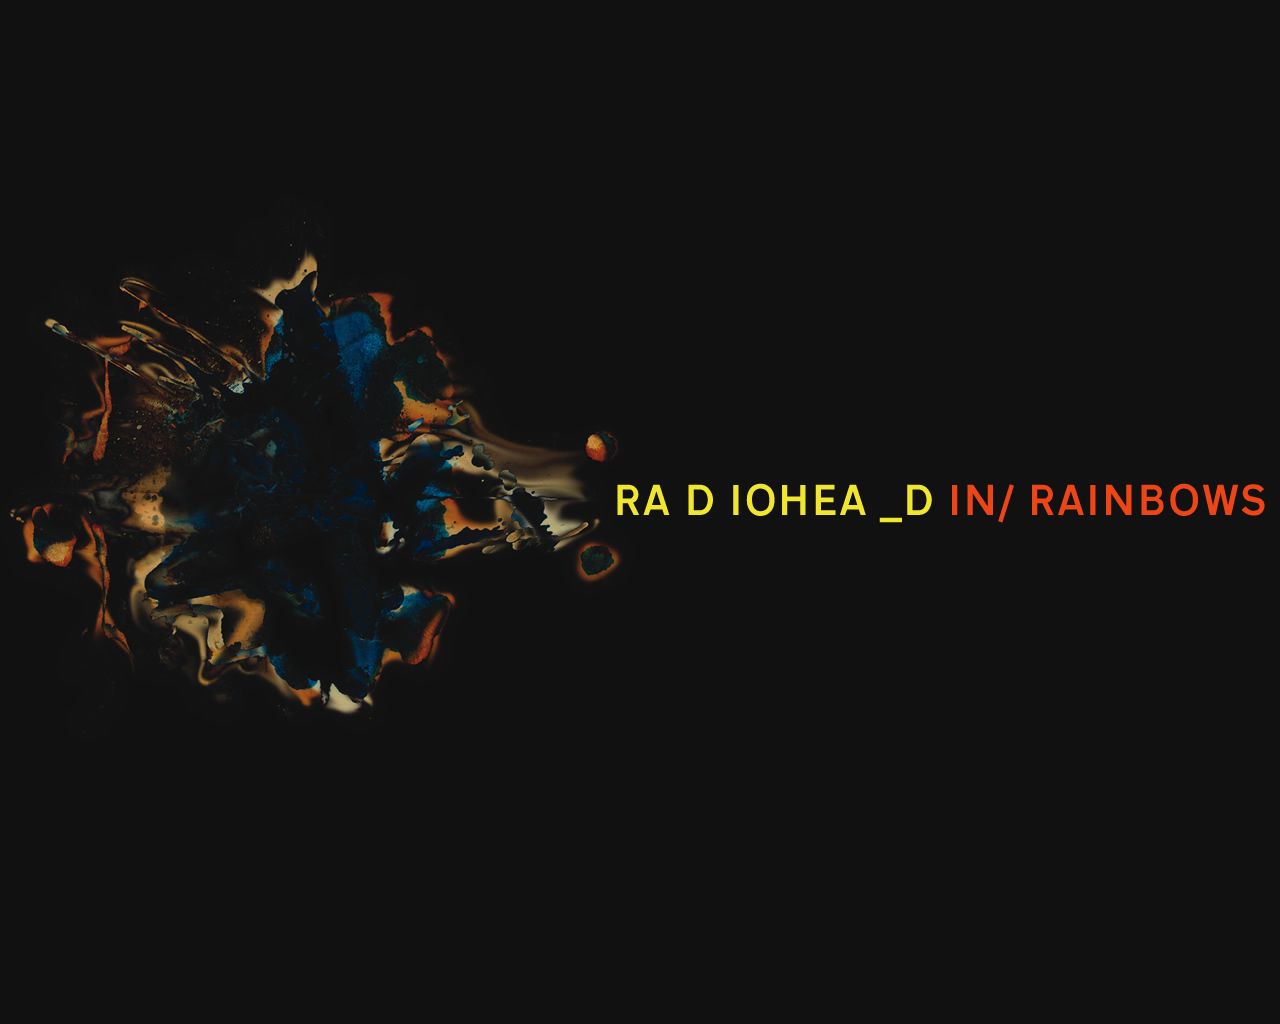 In Rainbows - Radiohead Wallpaper (27519259) - Fanpop